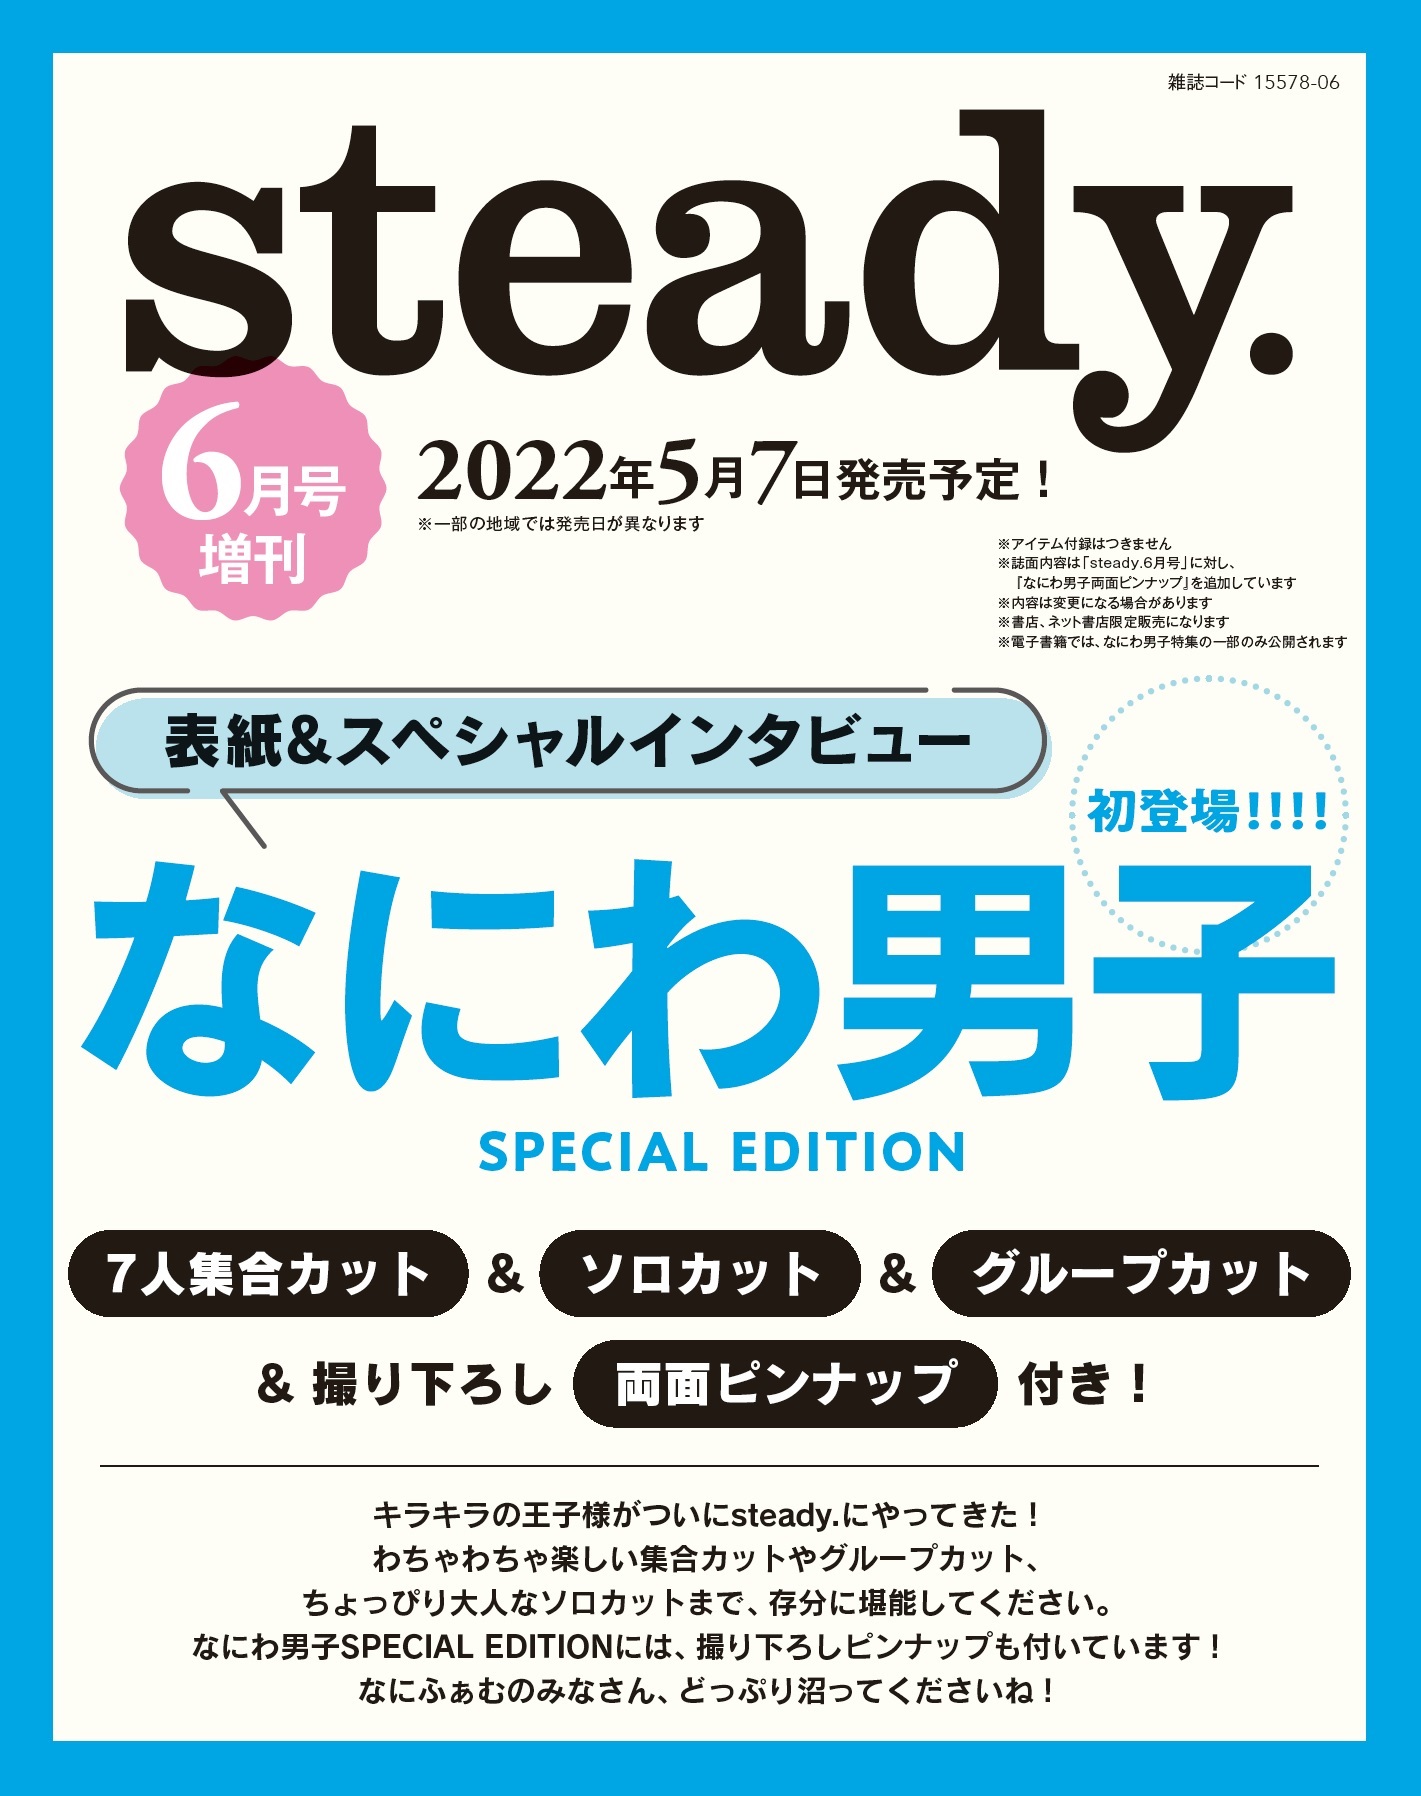 Steady 6月號增刊 - 送 Miffy 黑色斜揹袋